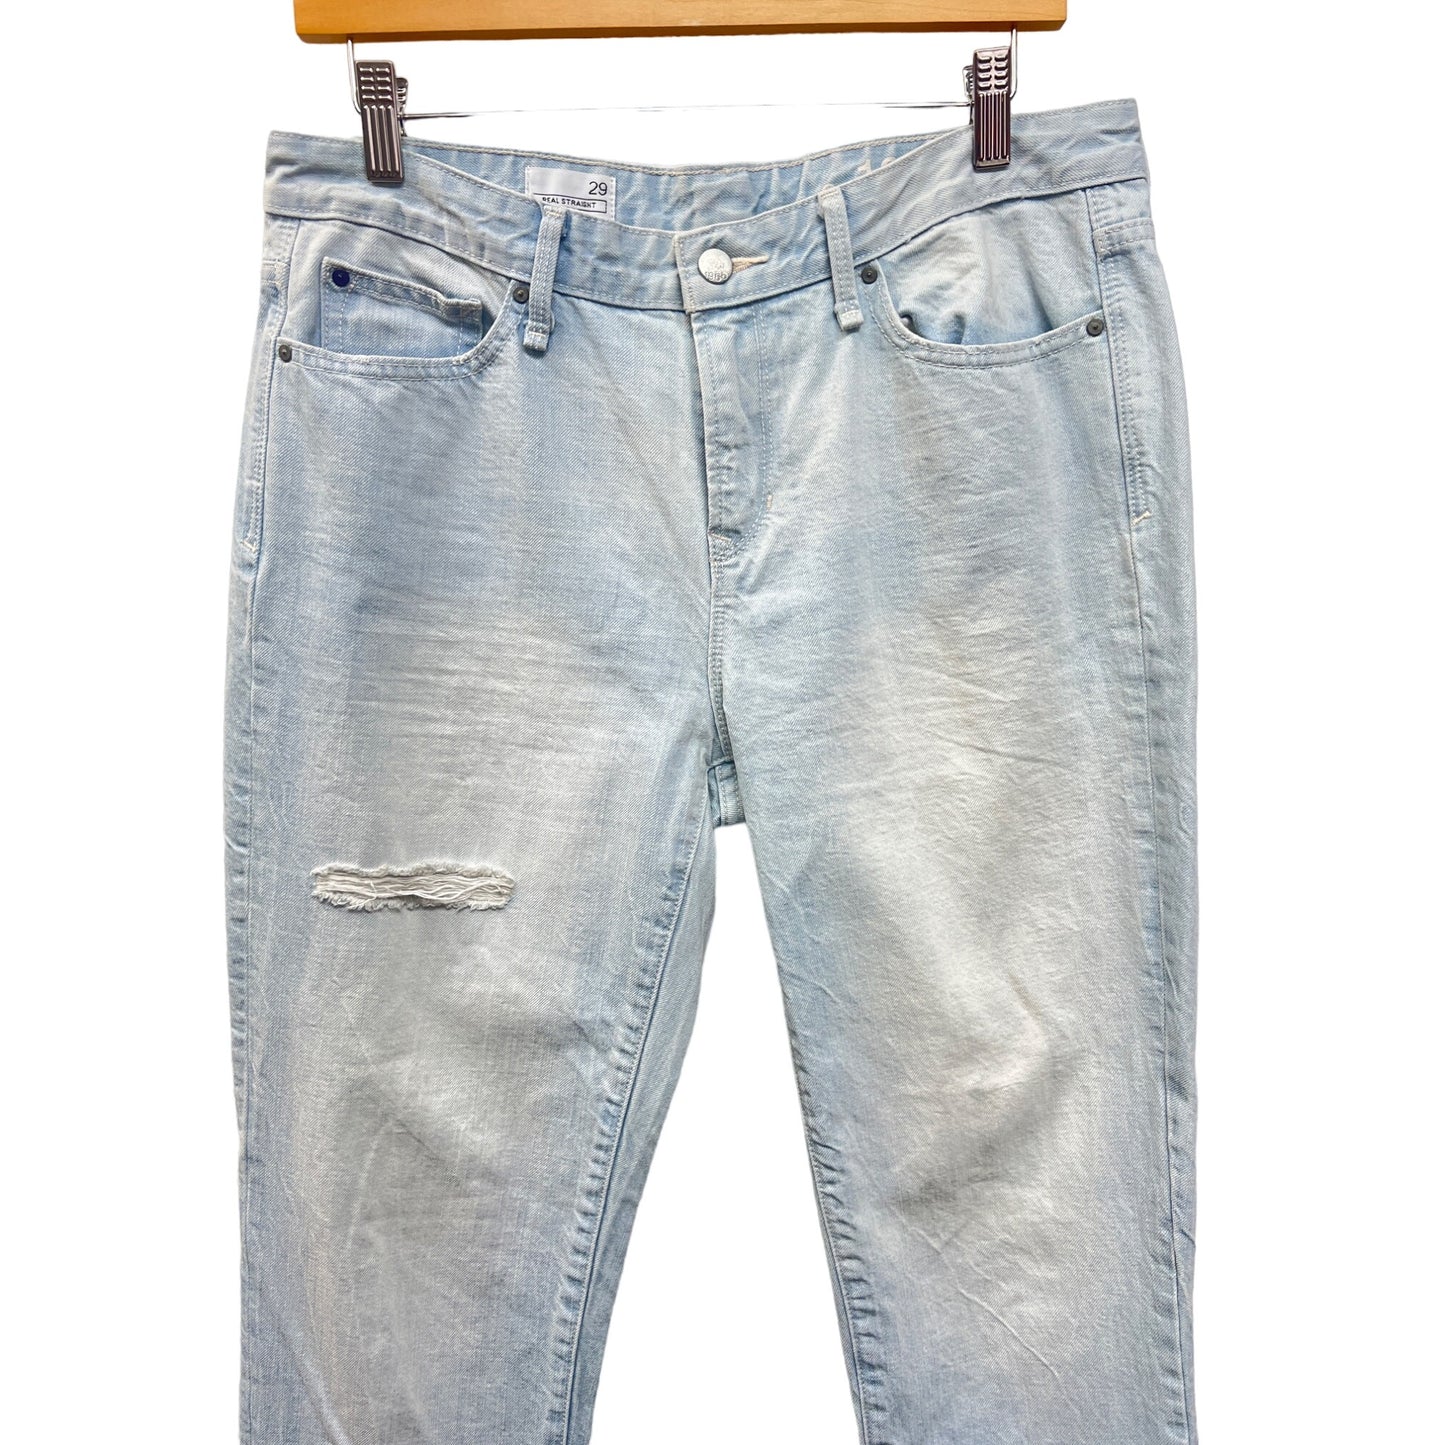 Gap Real Straight Light Wash Distressed Denim Jeans Sz 8